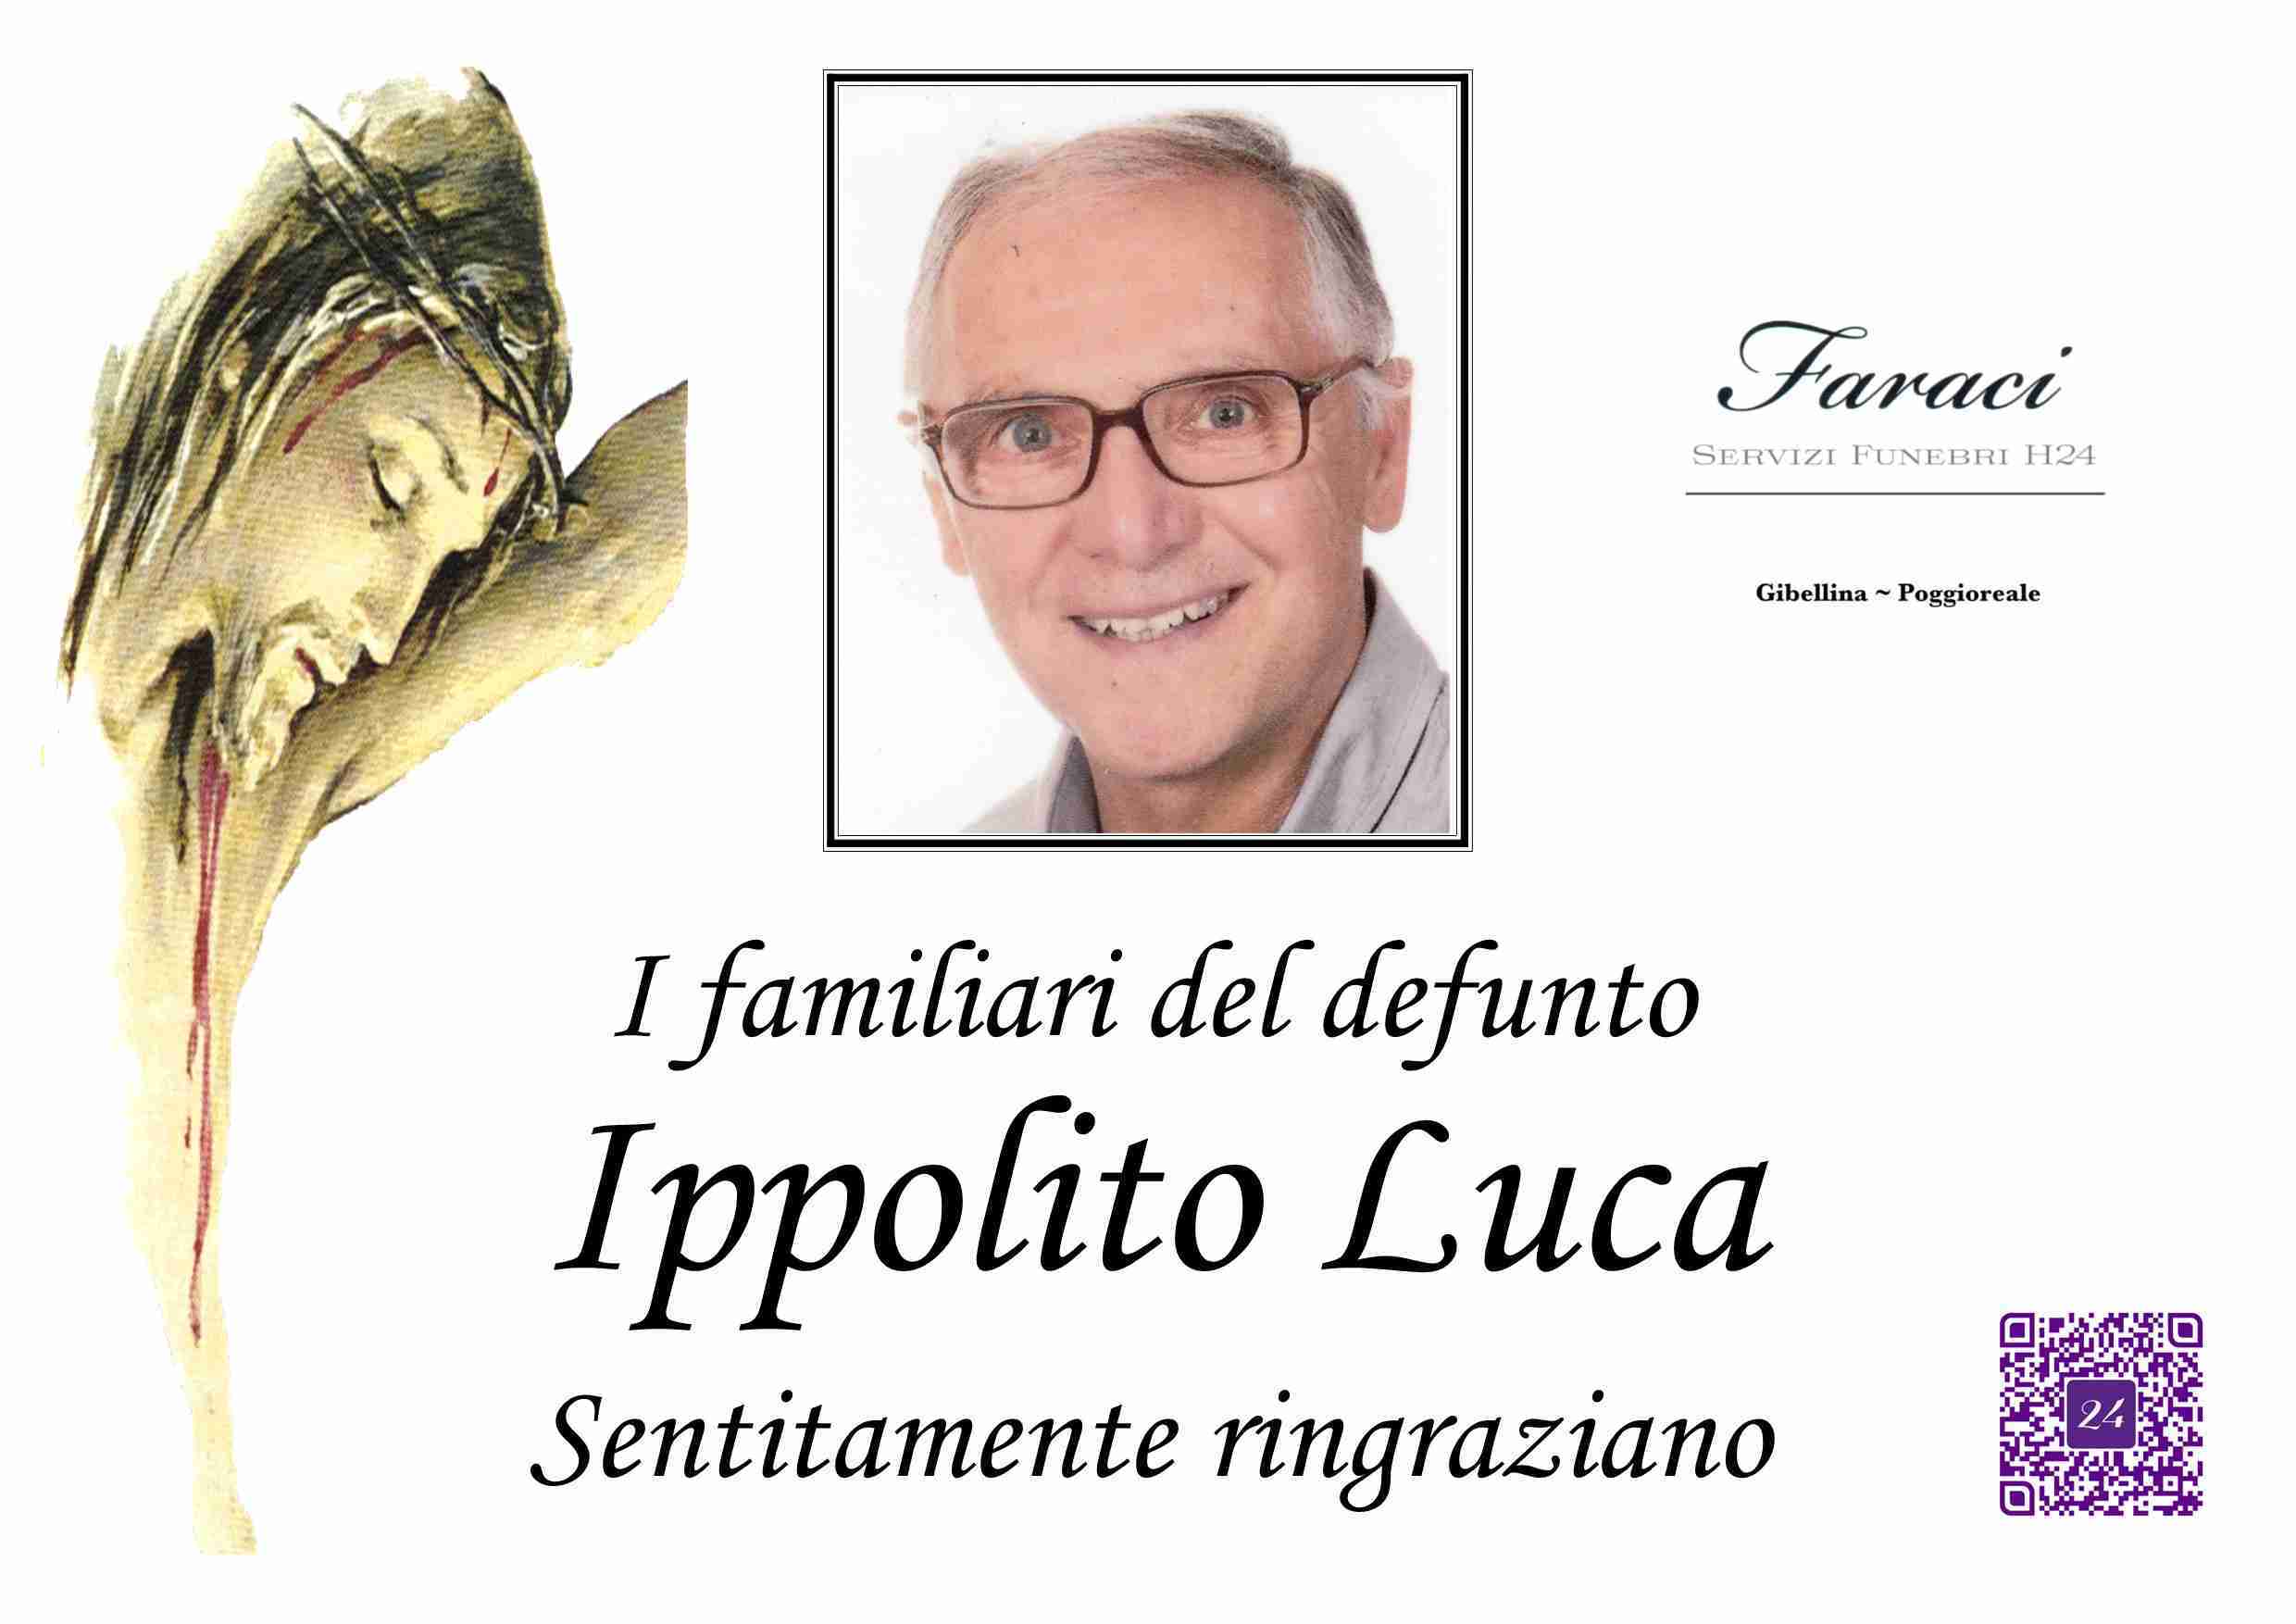 Luca Ippolito